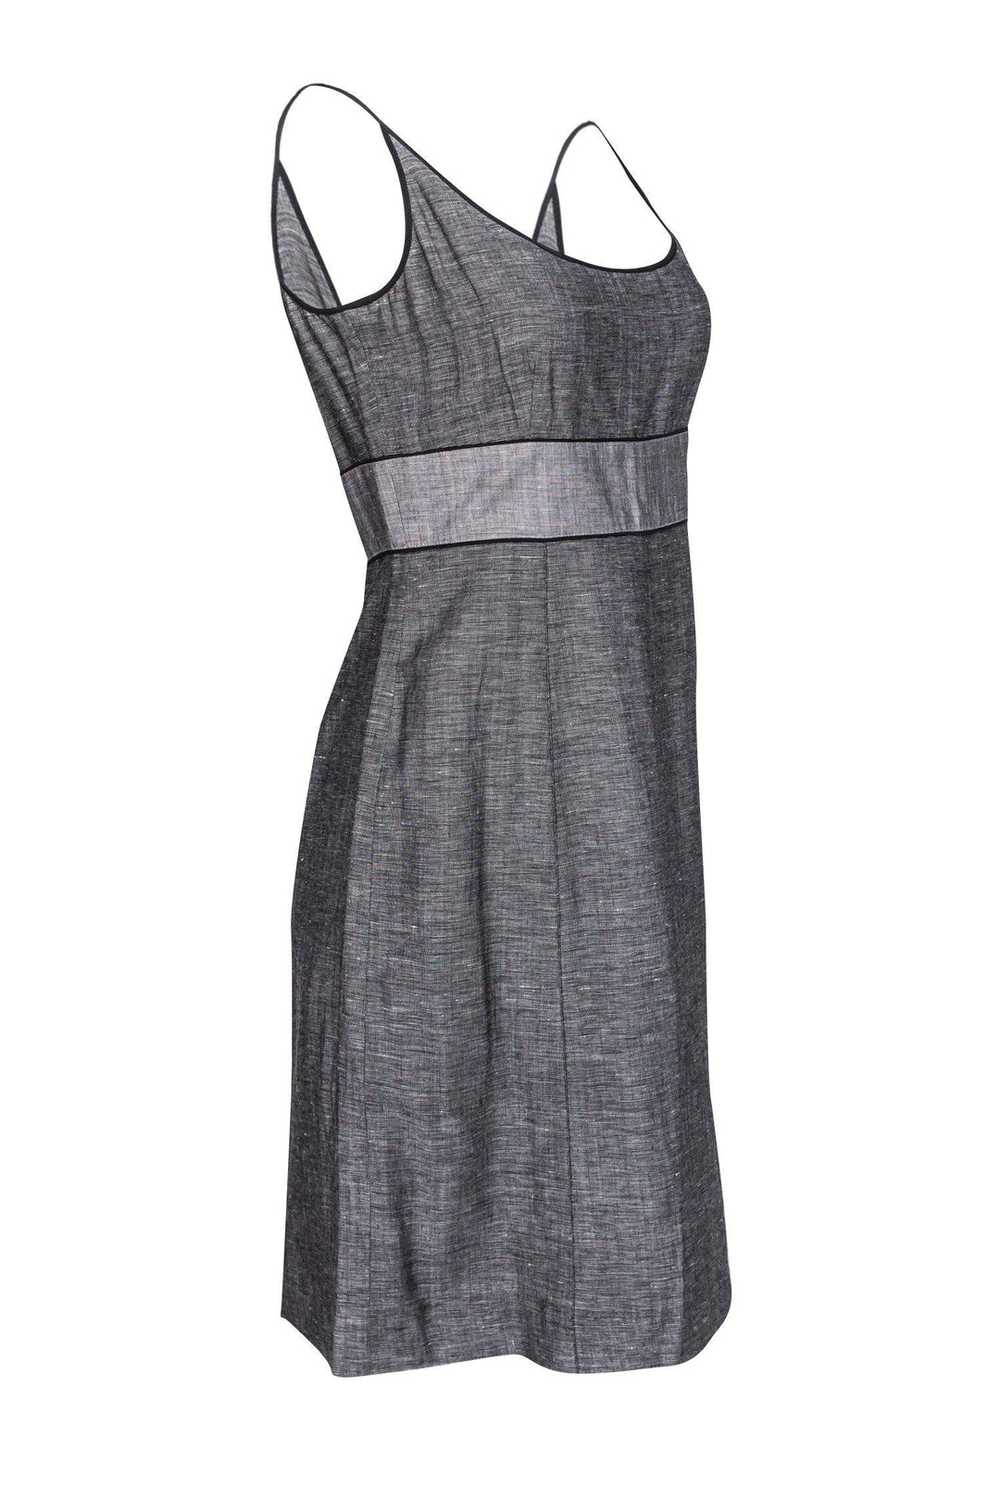 Narciso Rodriguez - Dark Gray & Black Tank Dress … - image 2